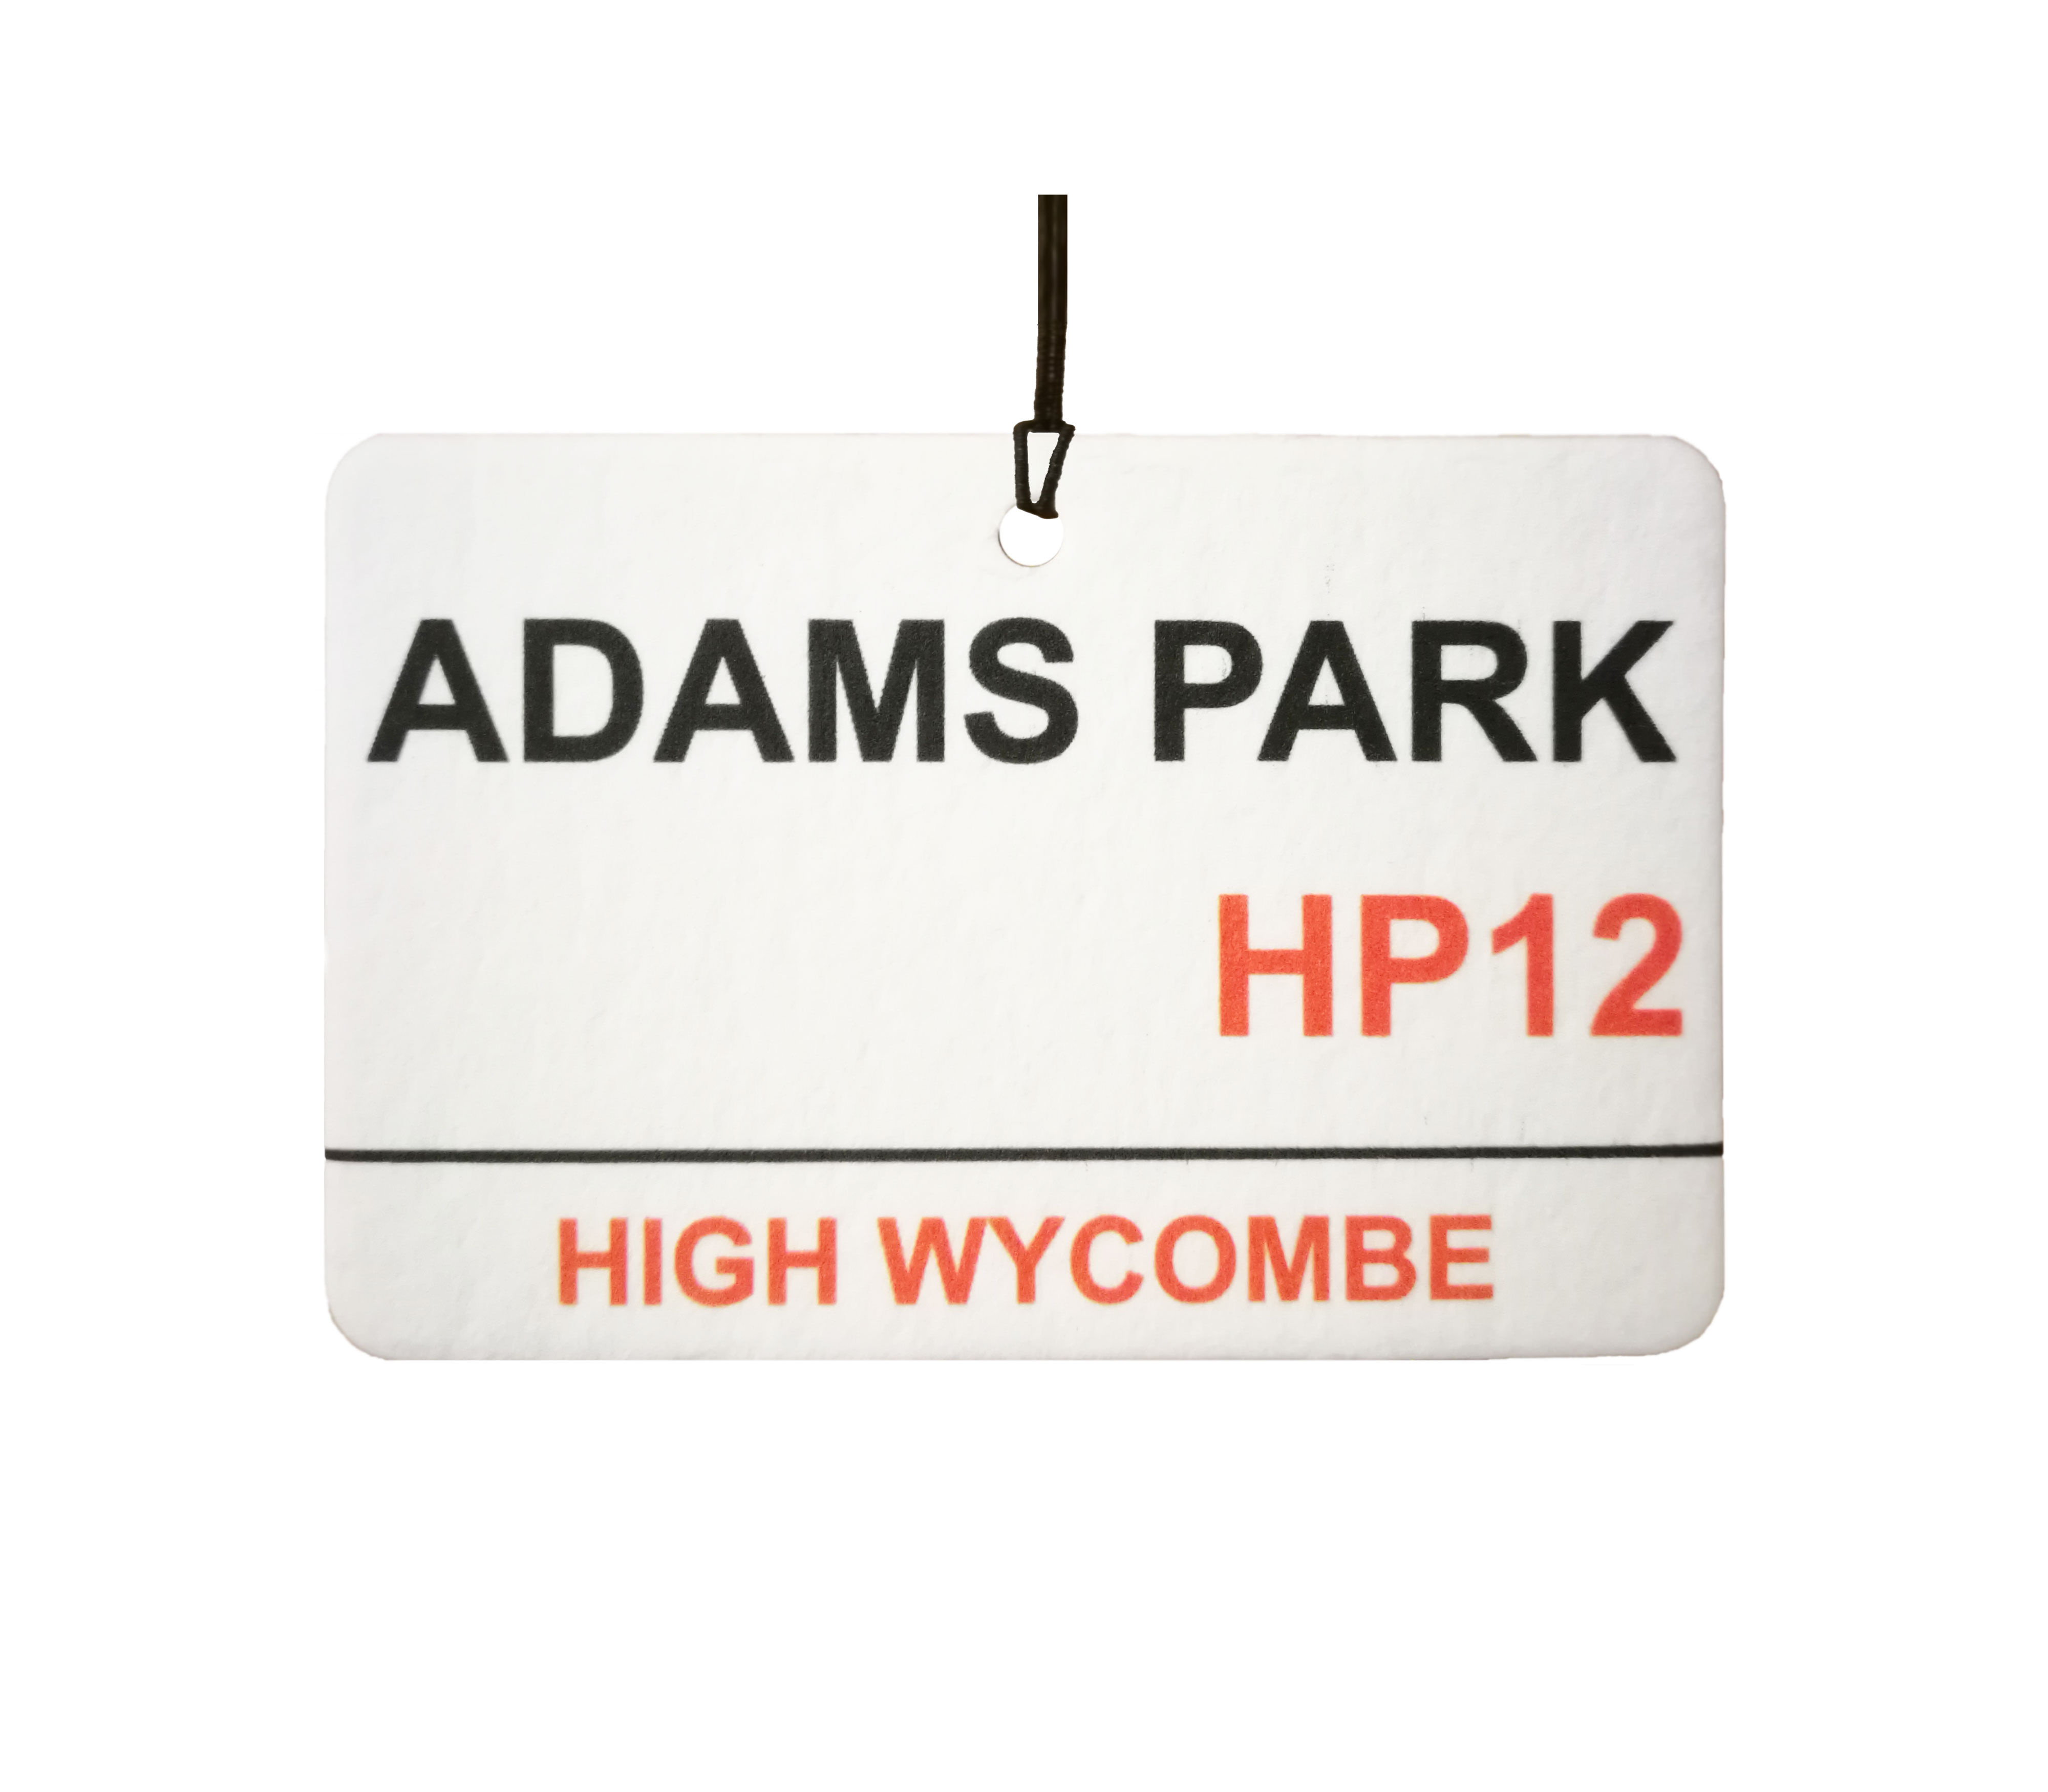 Wycombe Wanderers / Adams Park Street Sign